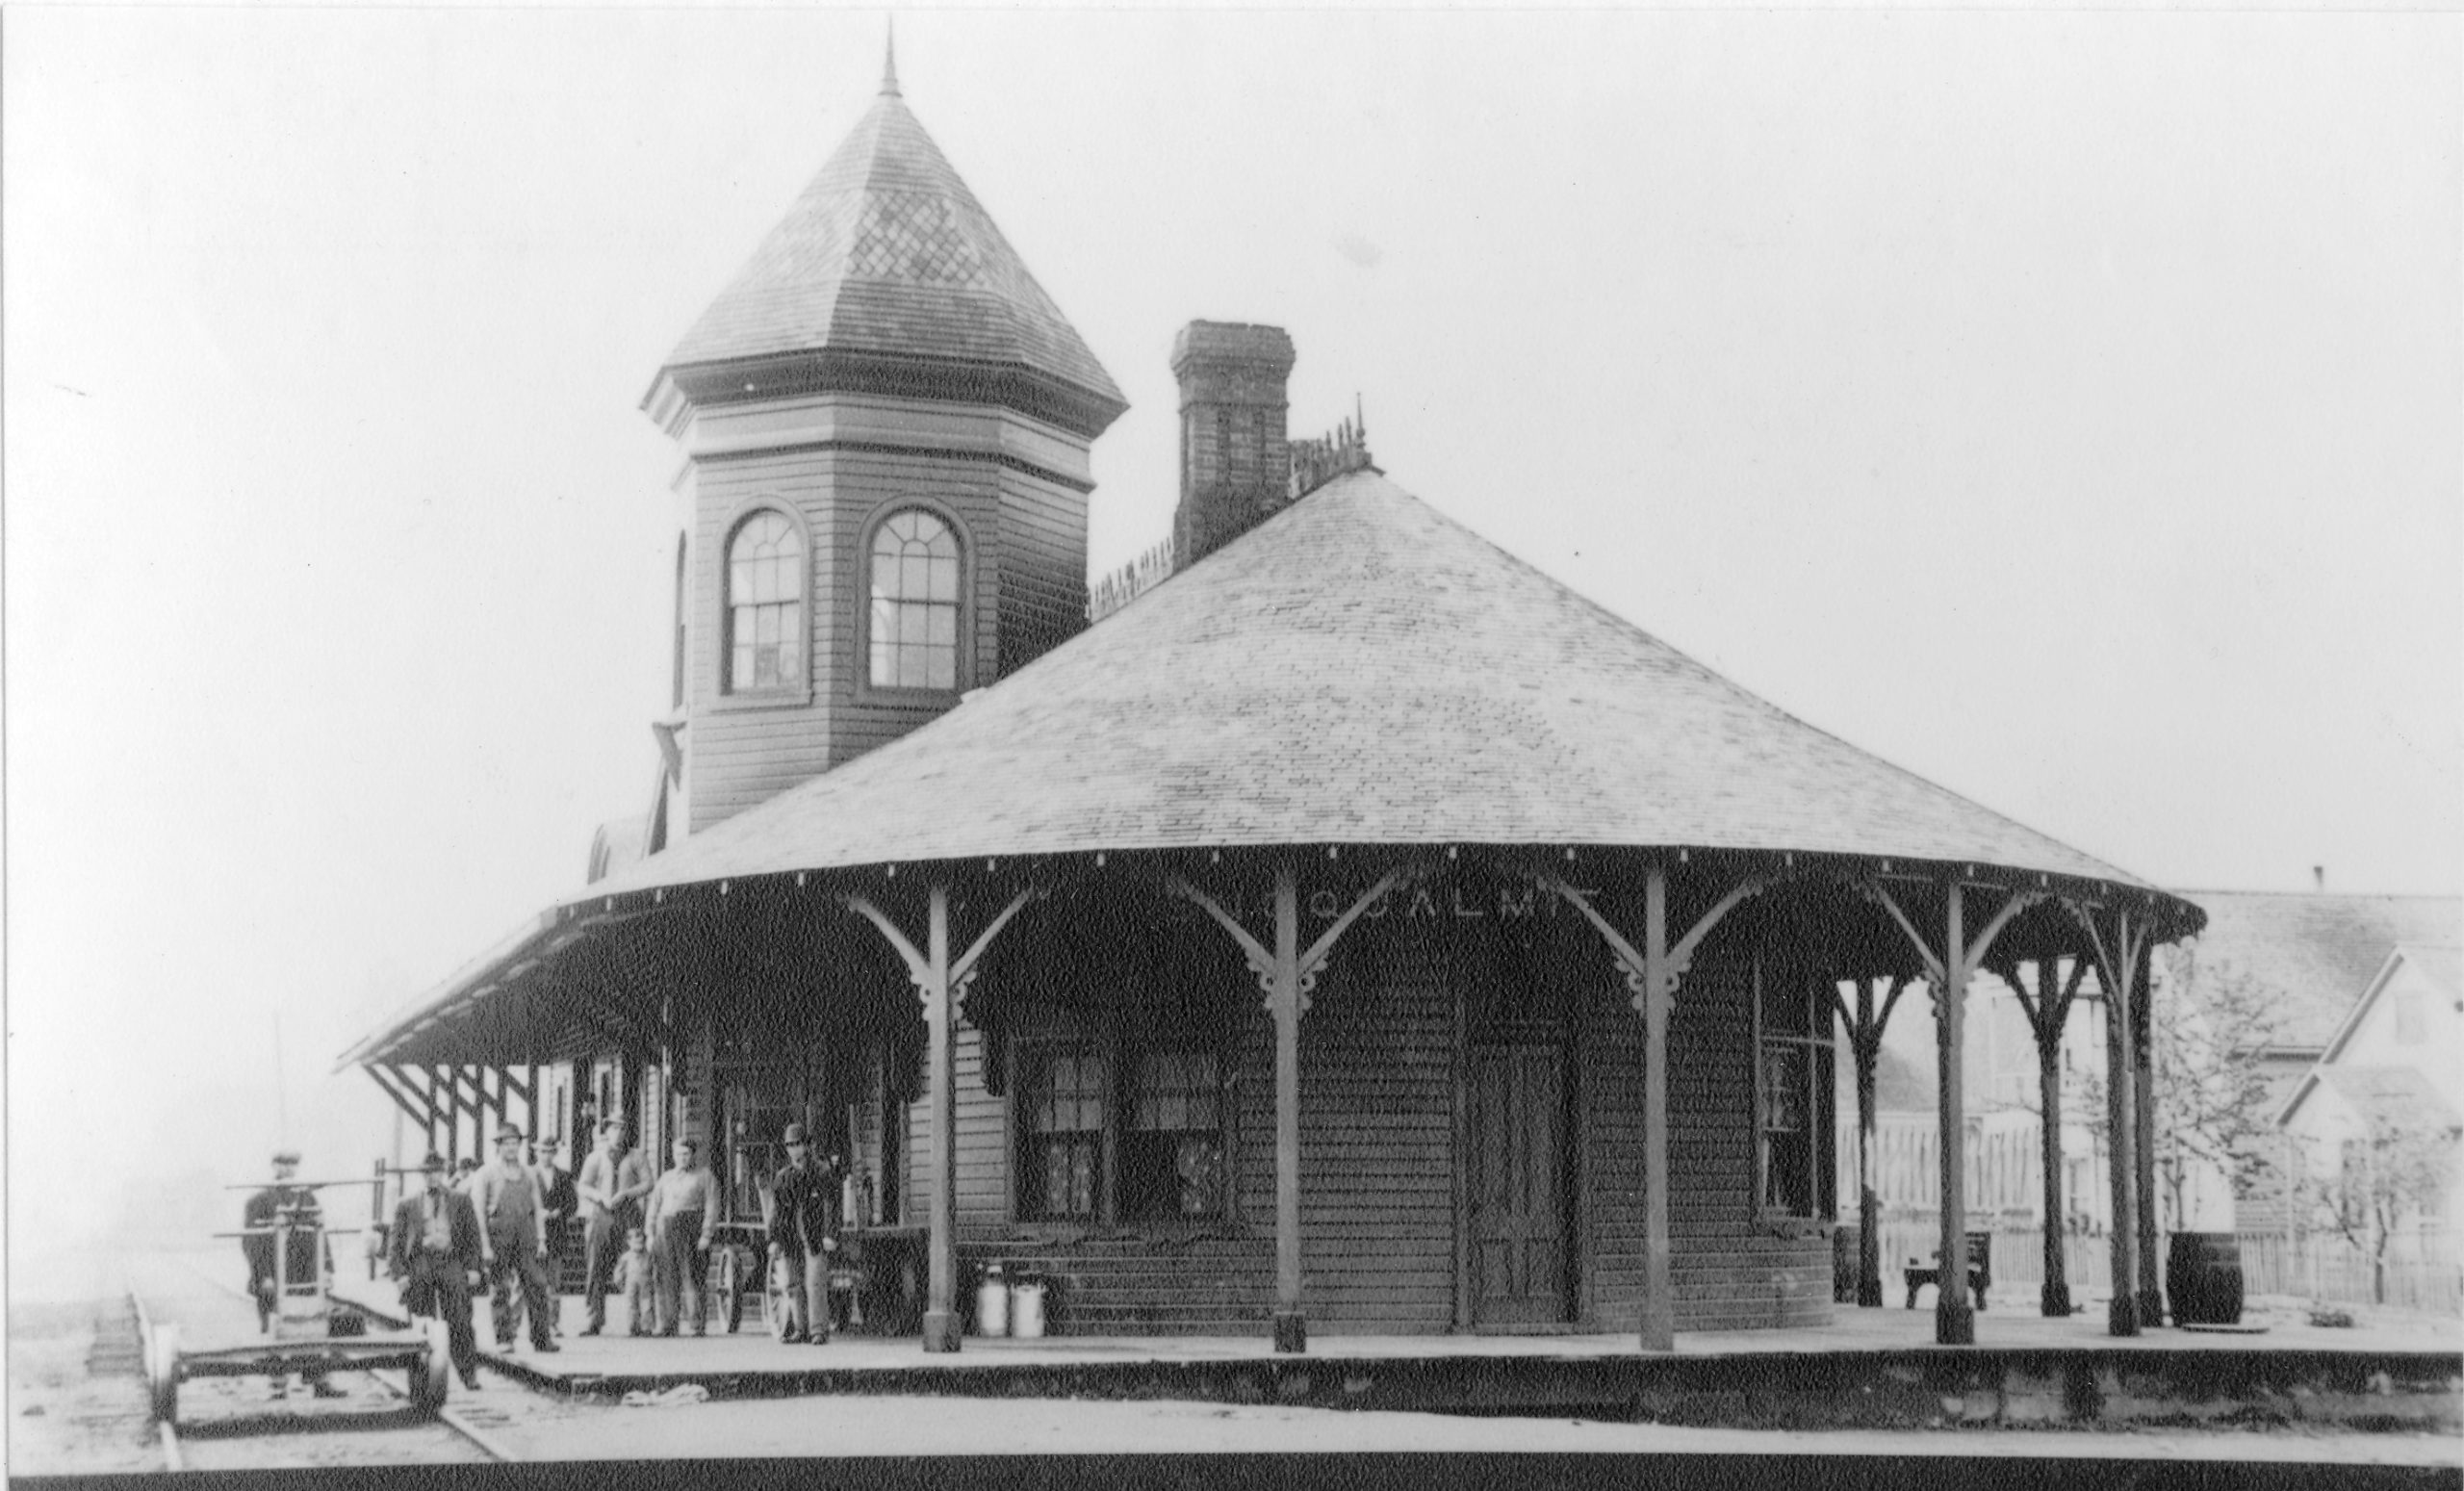 Snoqualmie Depot circa 1910